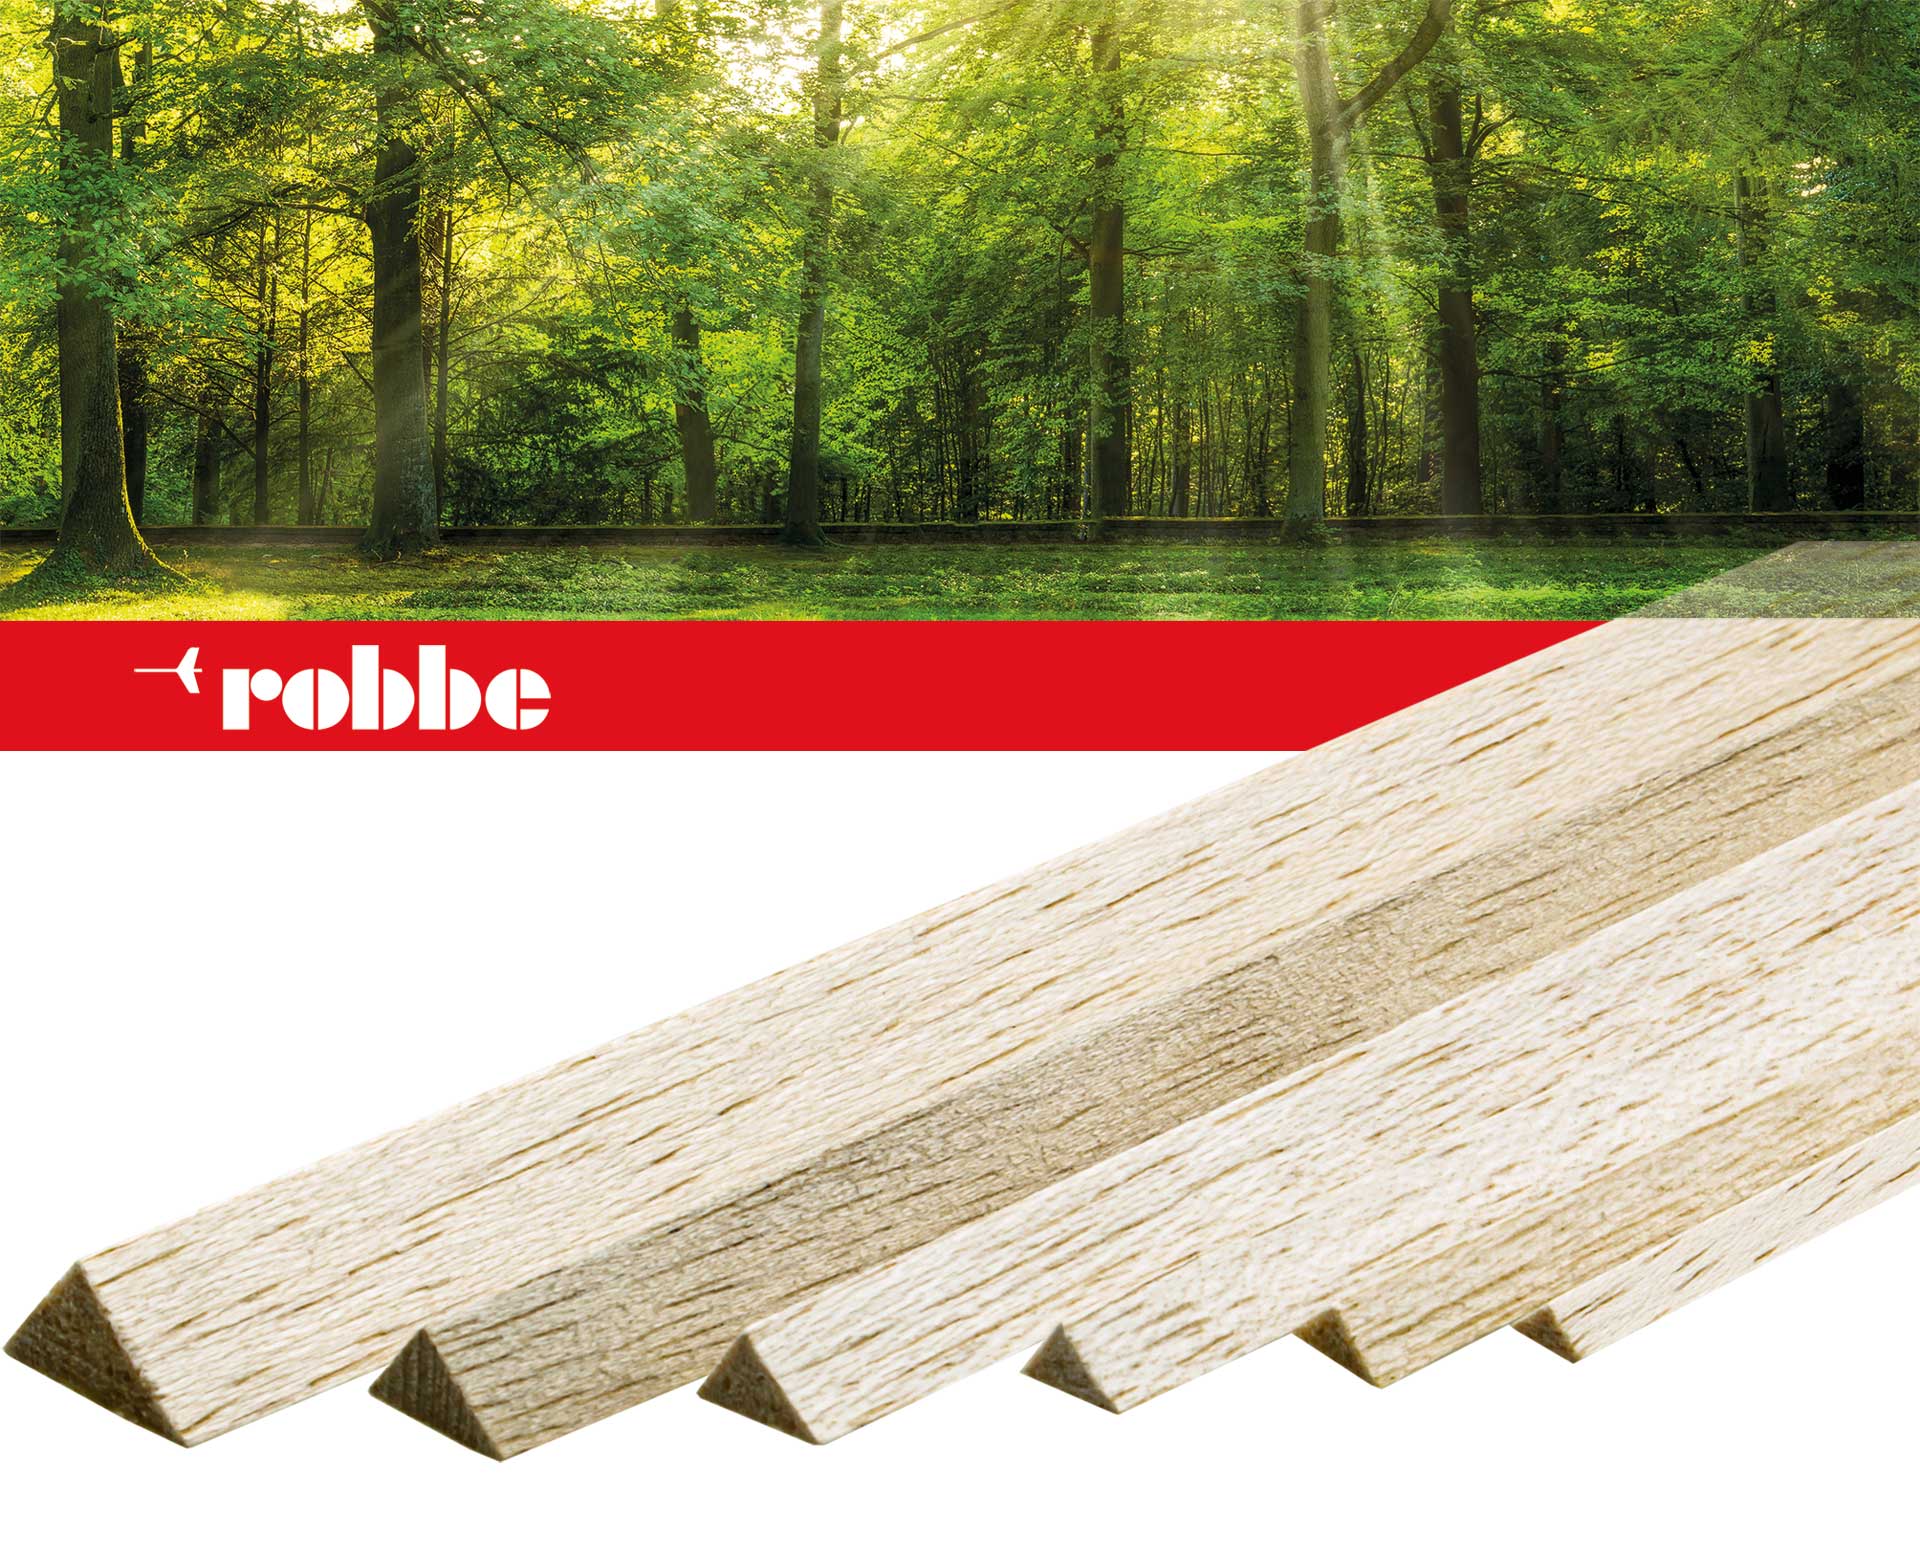 Robbe Modellsport Balsa triangular strip 6x6x1000mm